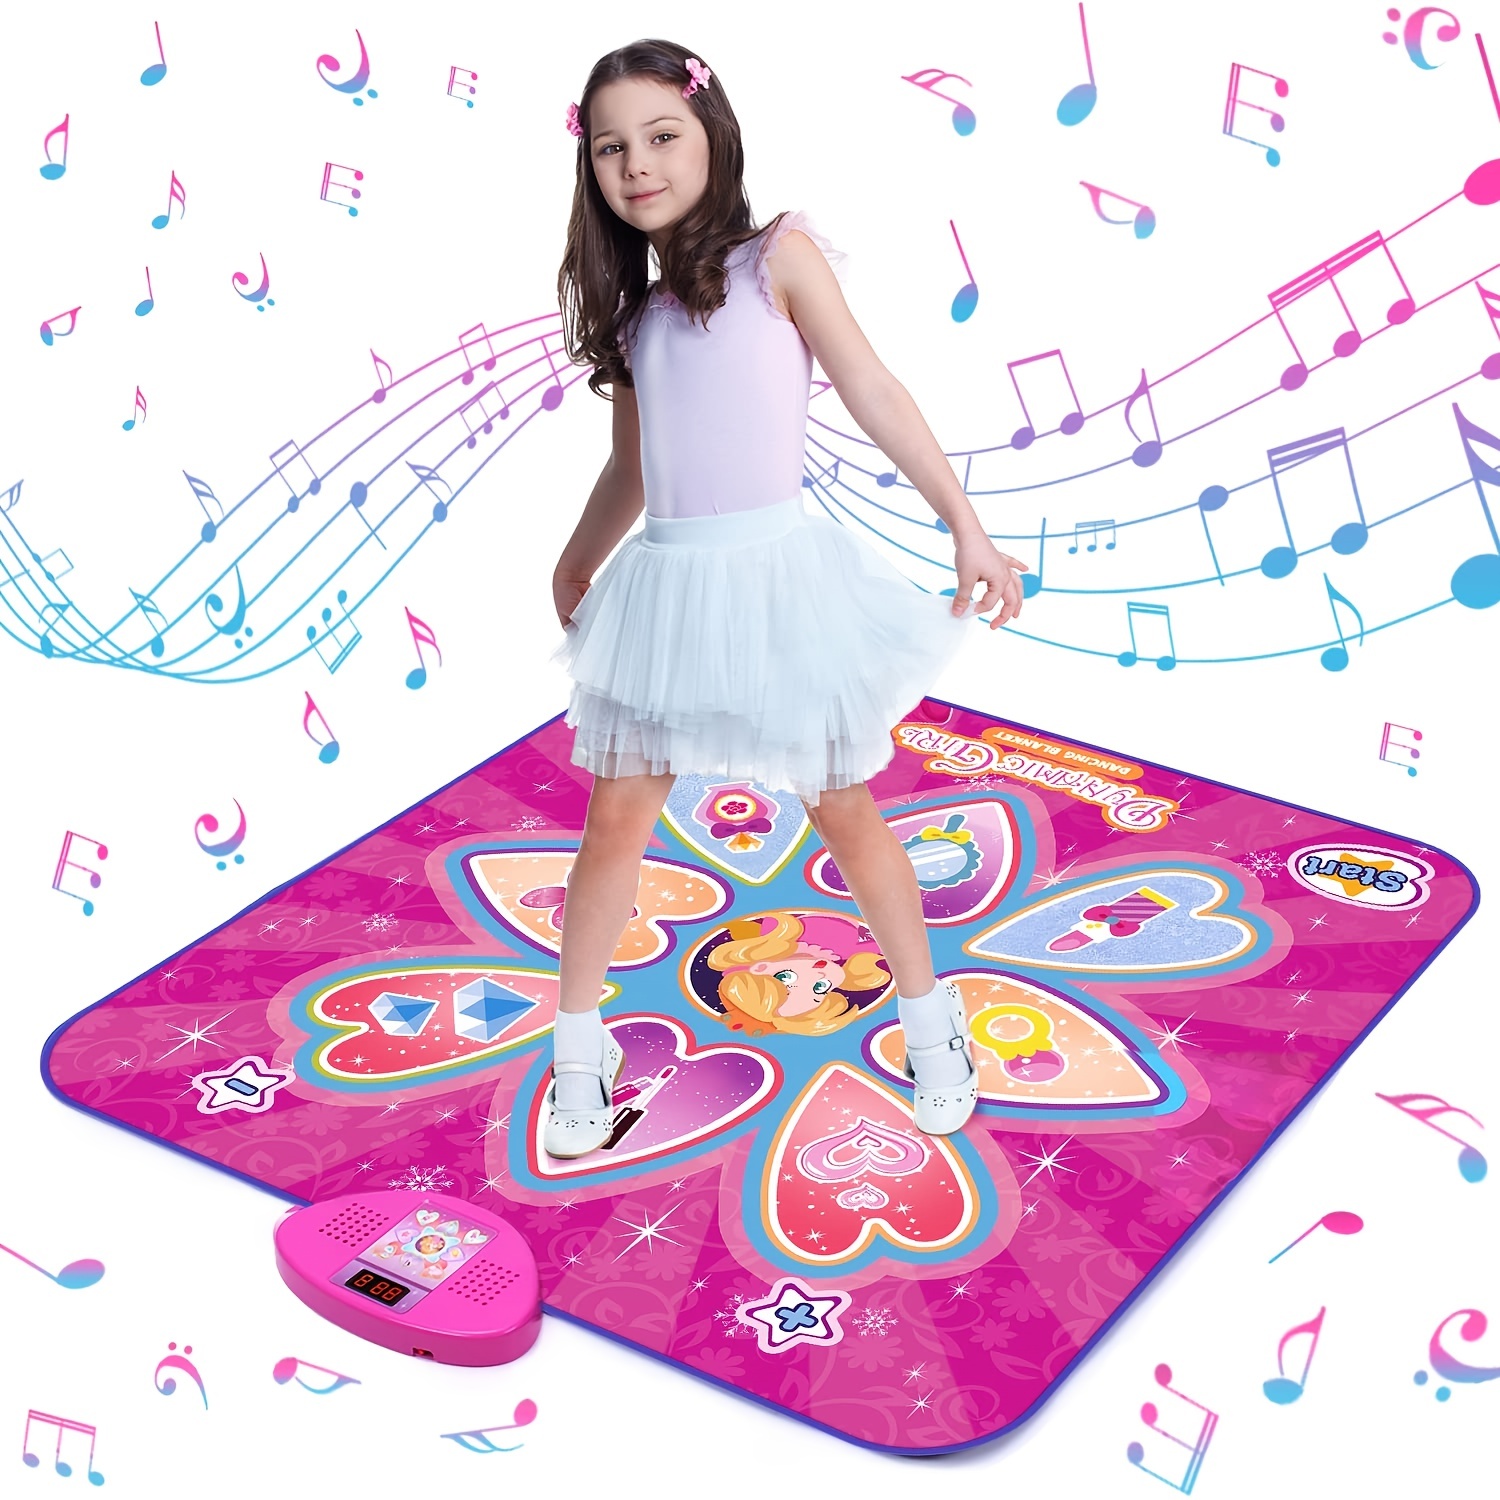 Dance Mat Adult Kids Hdmi Musical Blanket Pad